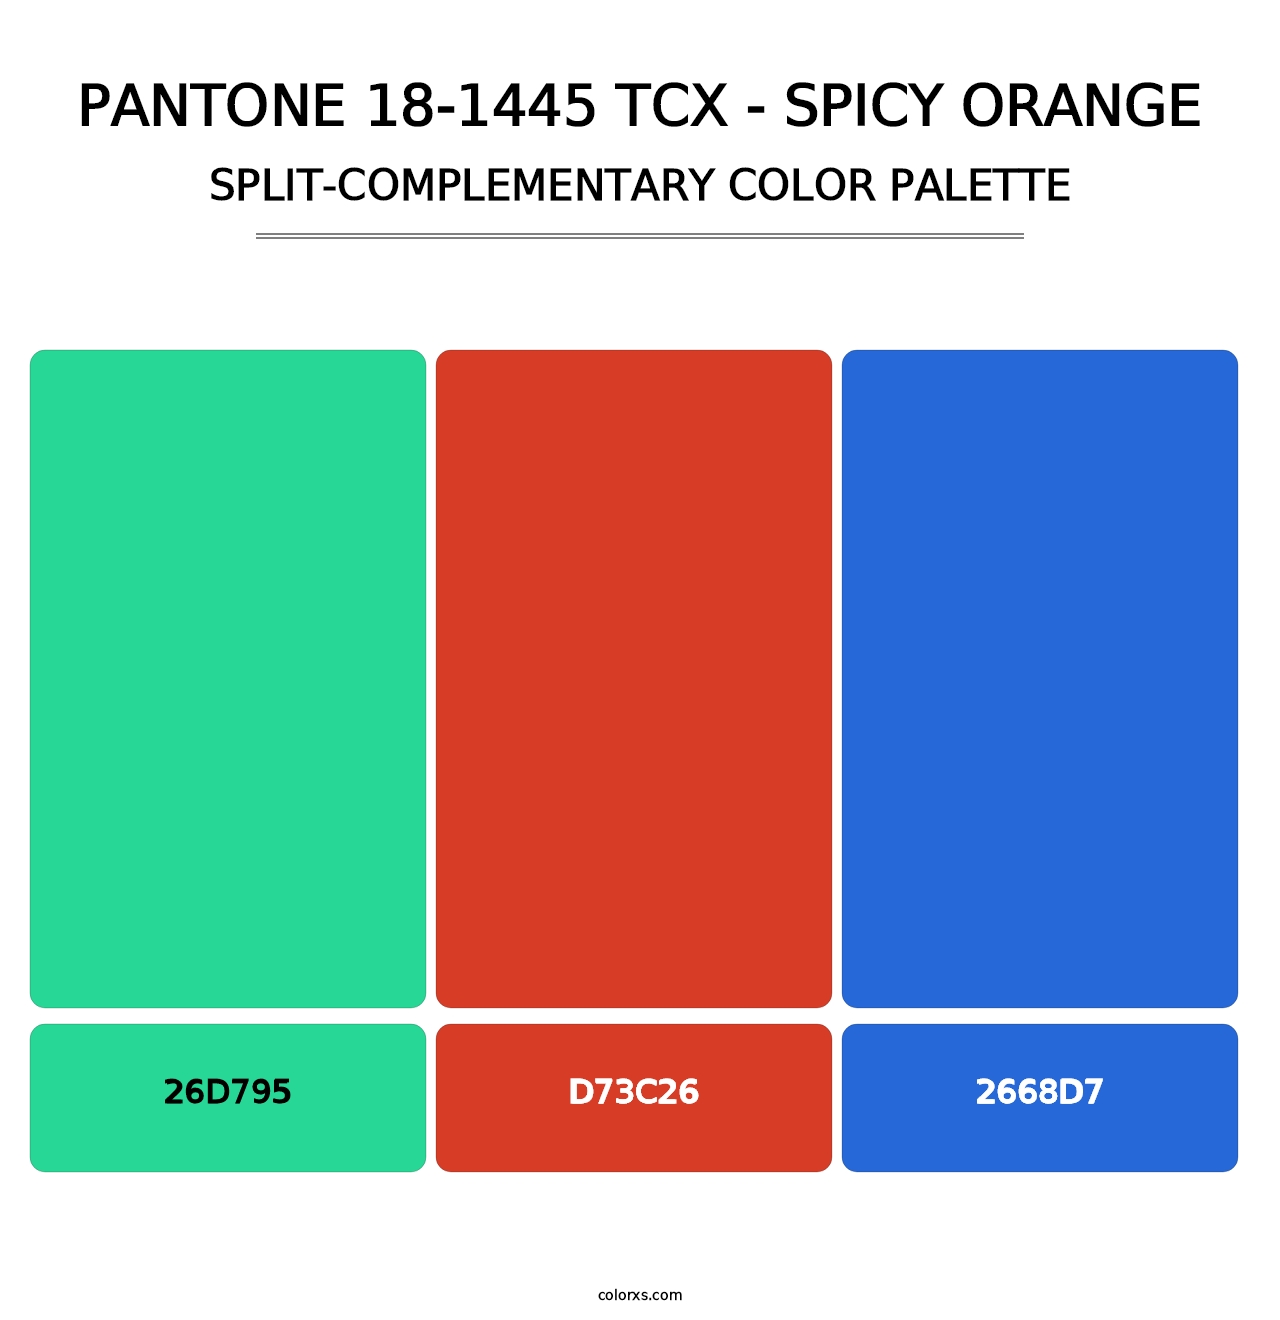 PANTONE 18-1445 TCX - Spicy Orange - Split-Complementary Color Palette